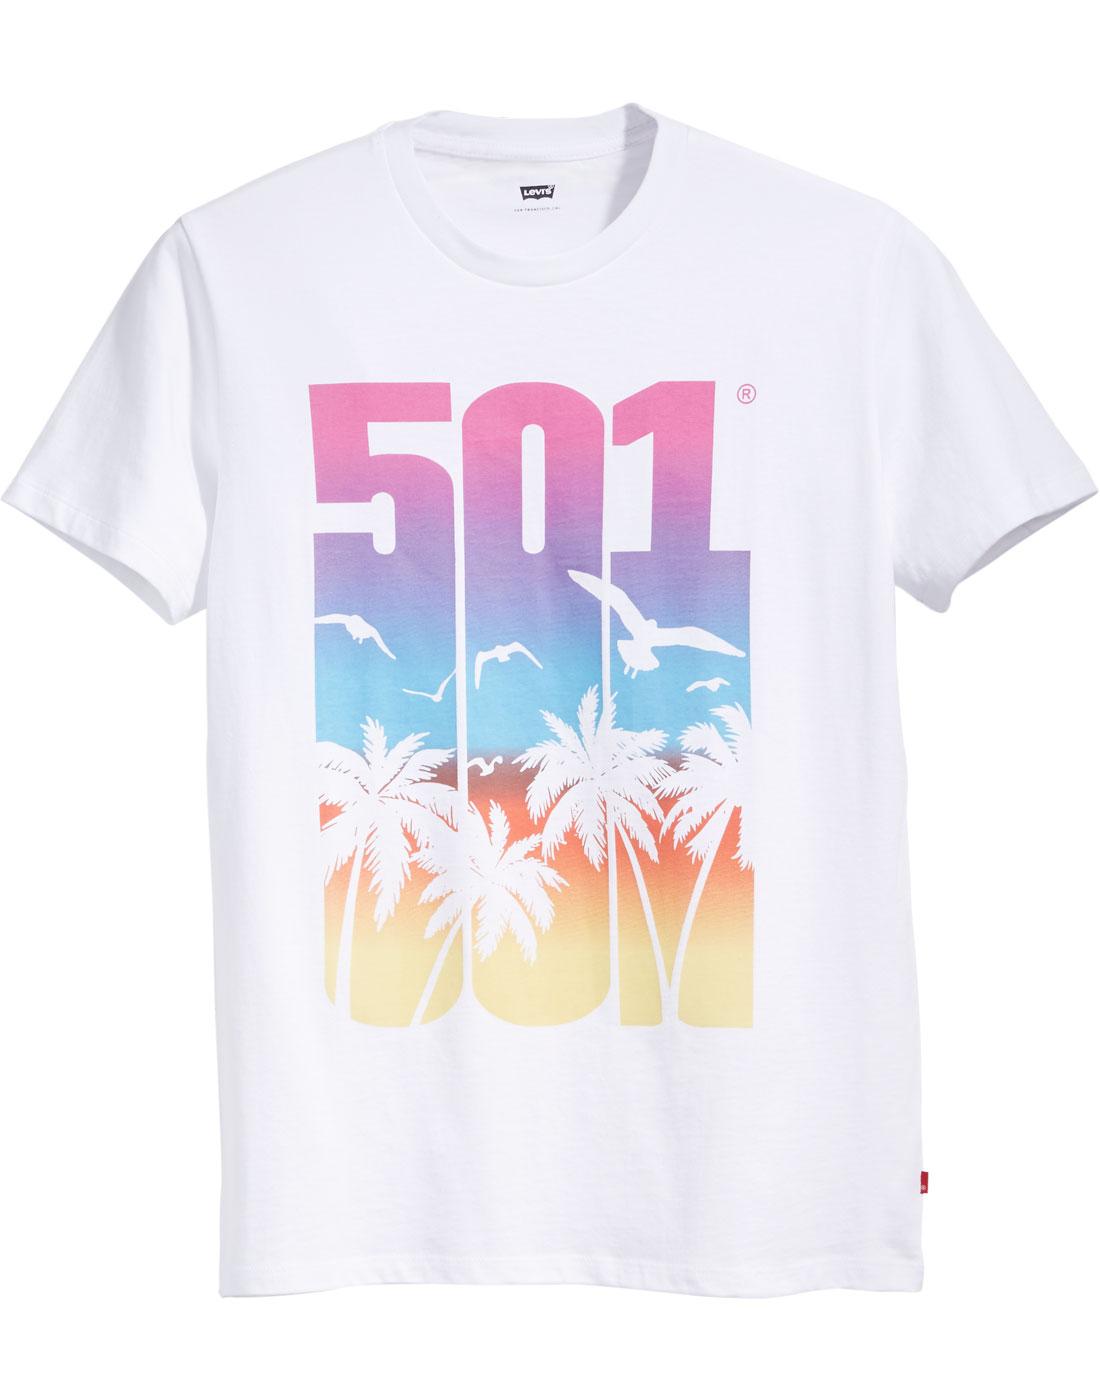 LEVI'S Men's Retro 1980s 501 Palm Tree Logo T-shirt in White